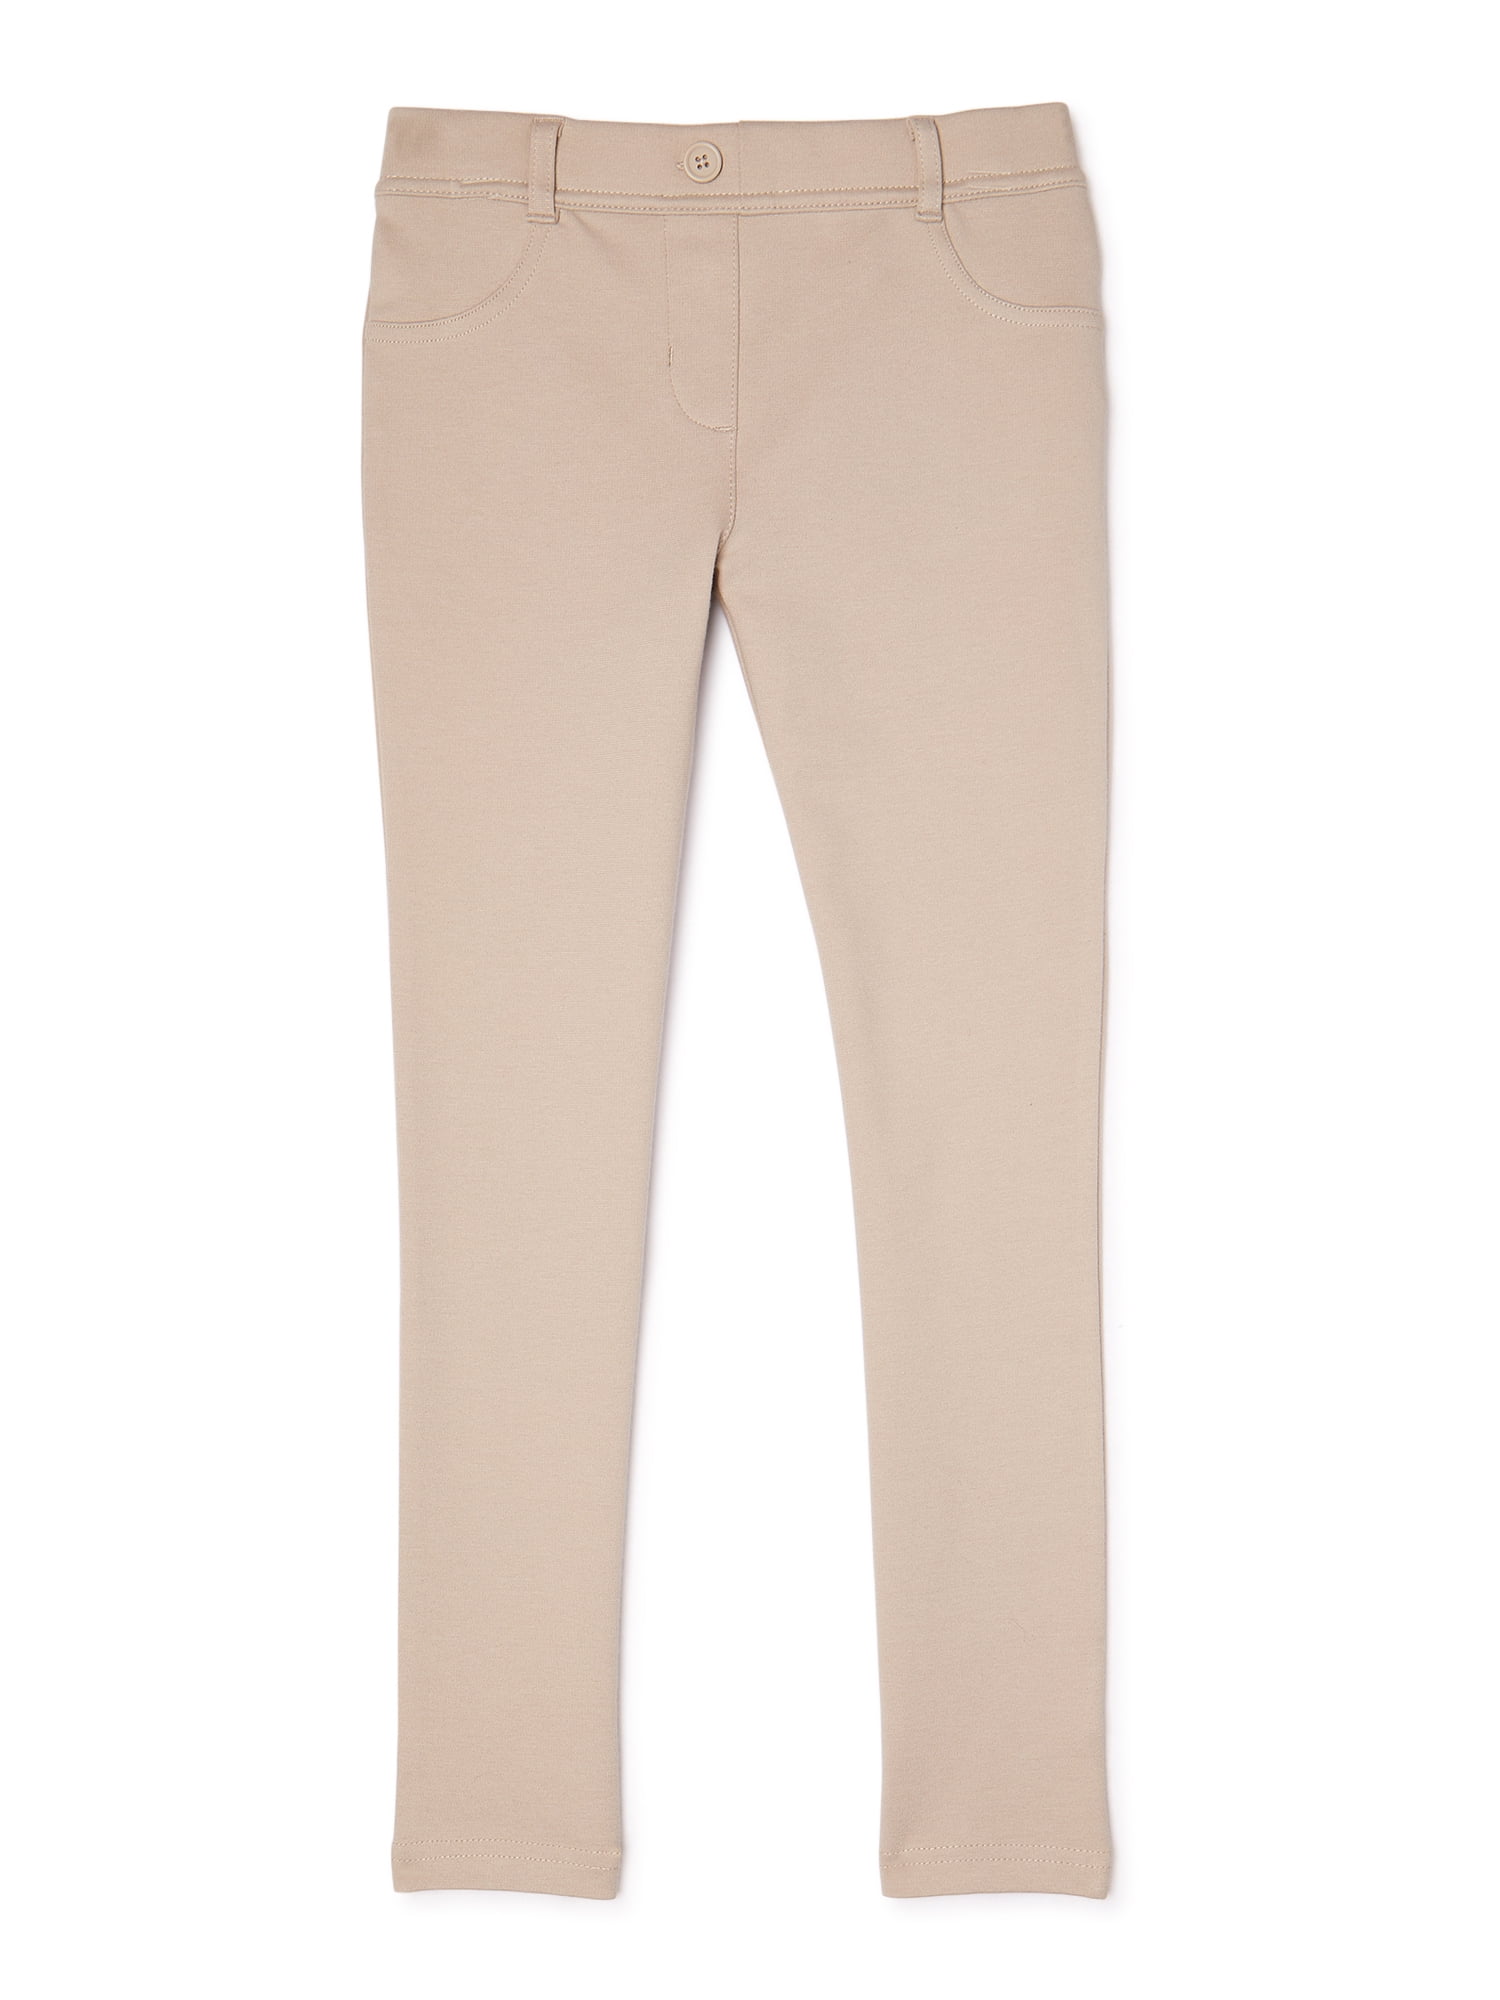 U.S 2 Pack Ponte Stretch Jegging Khaki Pants Size: 4-16 Polo Assn Girls' School Uniform Pants 